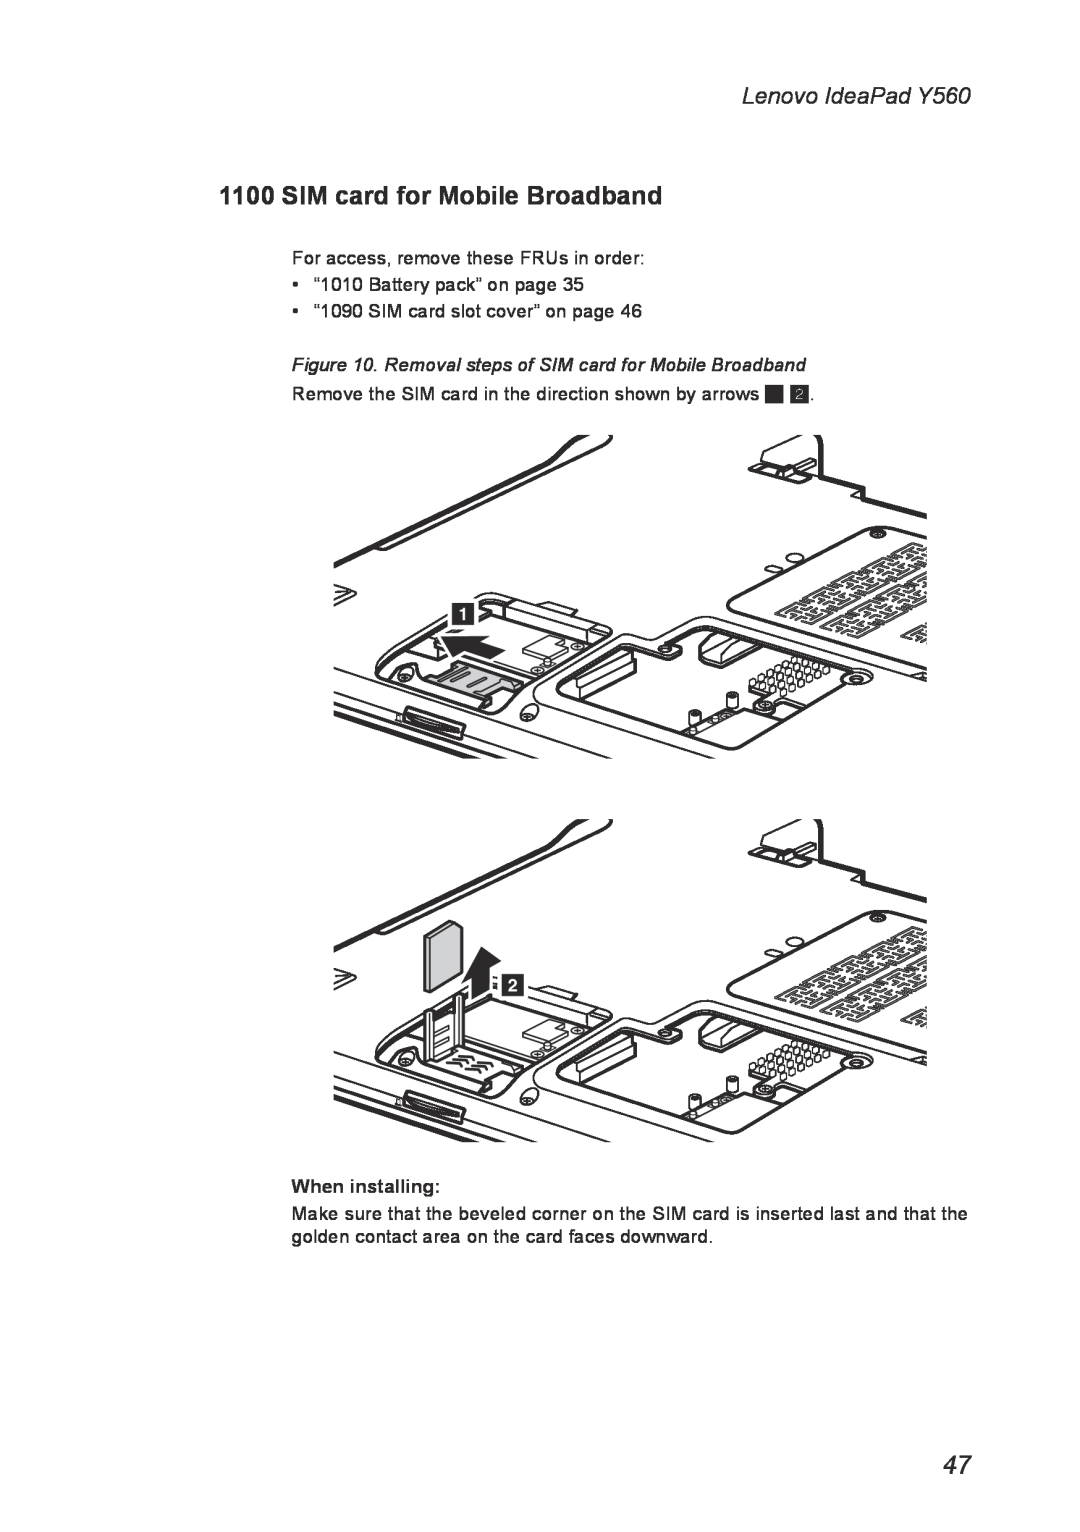 Lenovo manual Removal steps of SIM card for Mobile Broadband, Lenovo IdeaPad Y560, When installing 